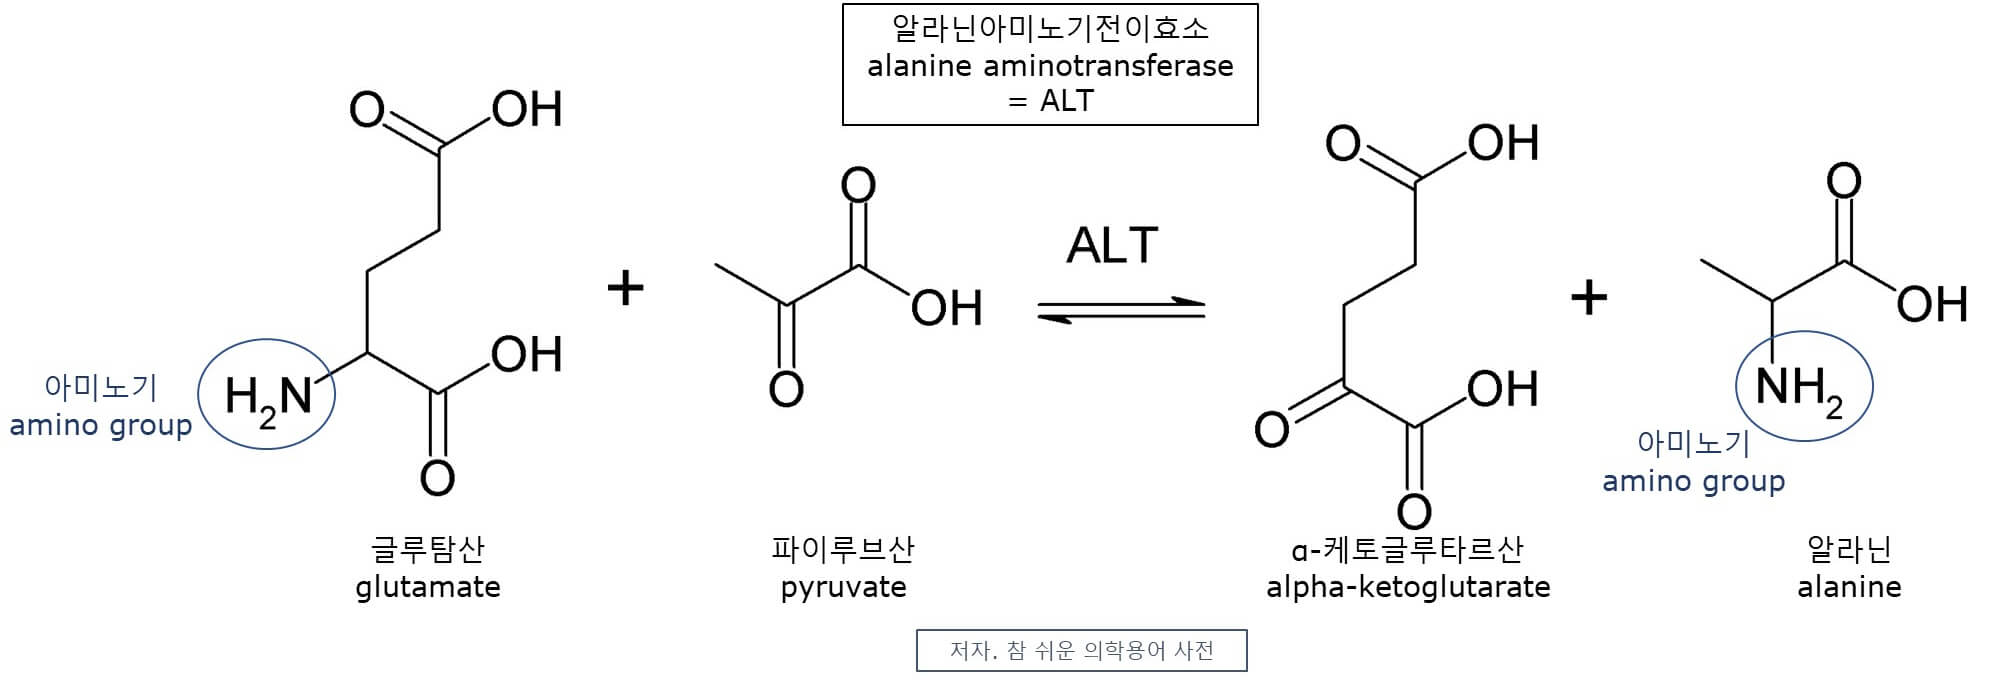 alanine aminotransferase 뜻